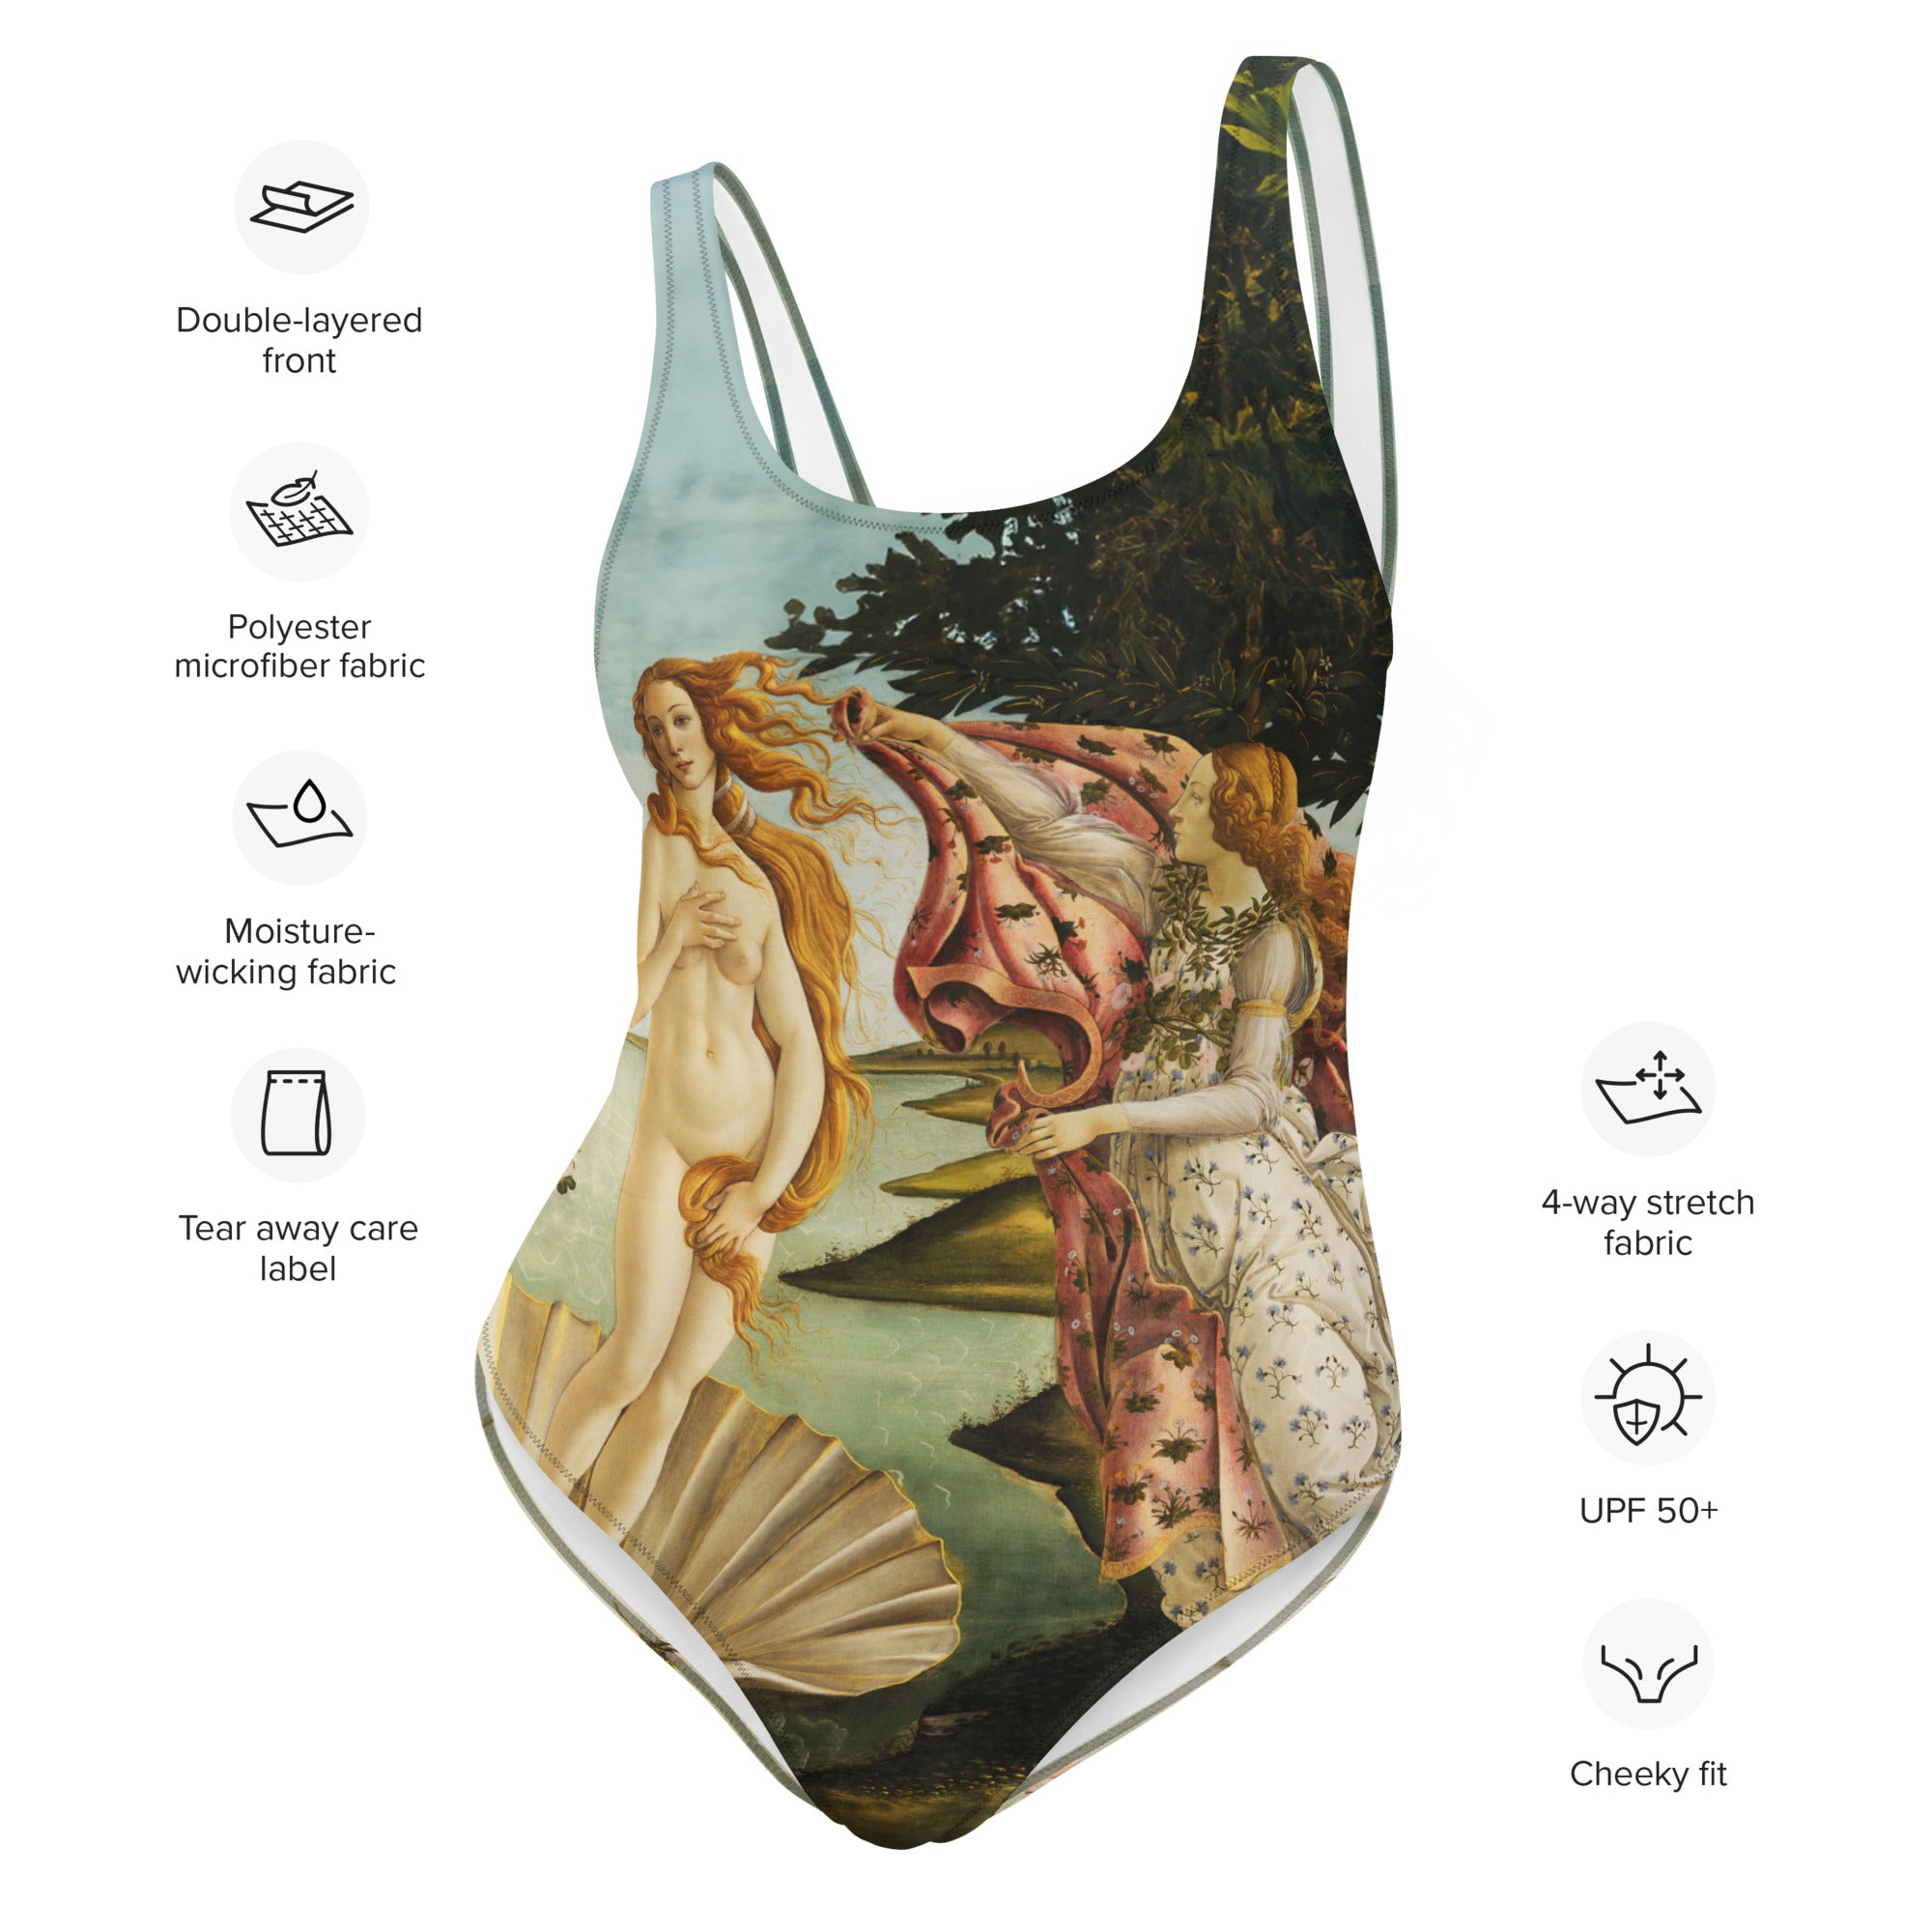 Sandro Botticelli 'The Birth of Venus' Famous Painting Swimsuit | Premium Art One Piece Swimsuit